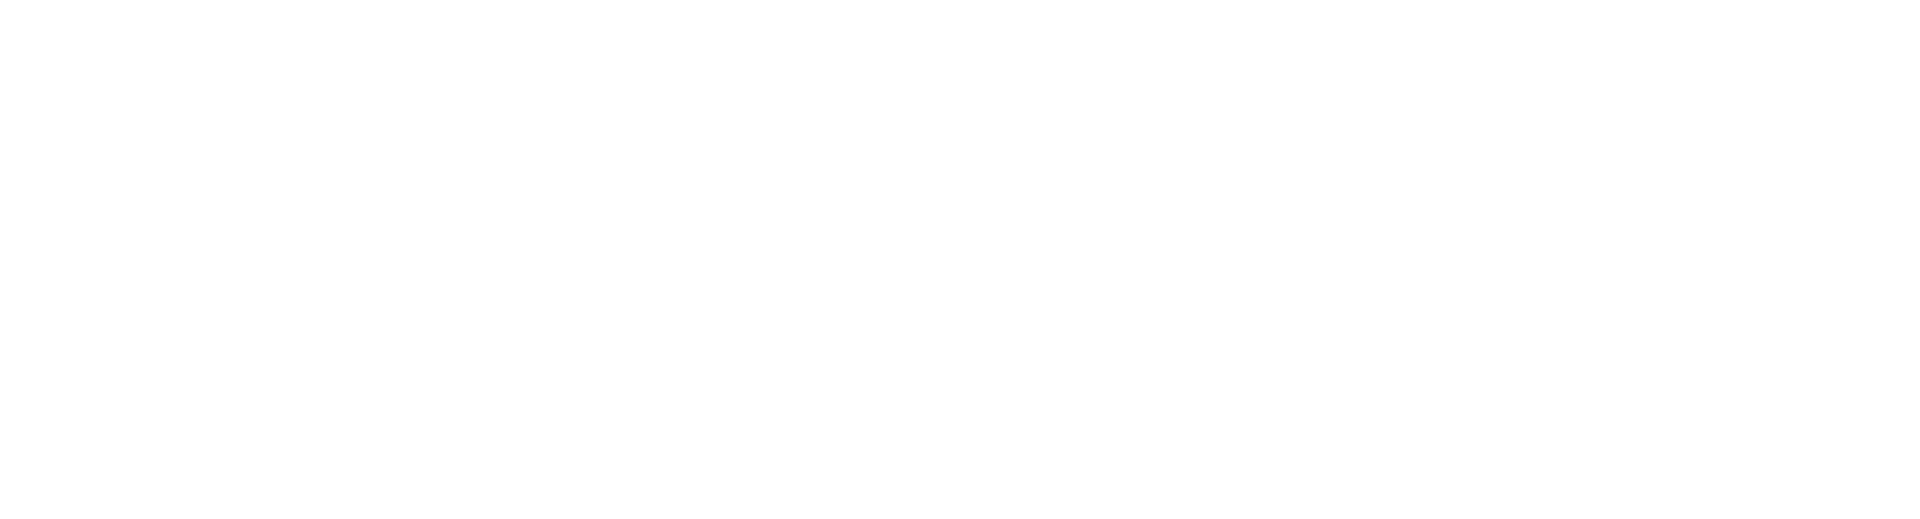 giphy_studios2-1